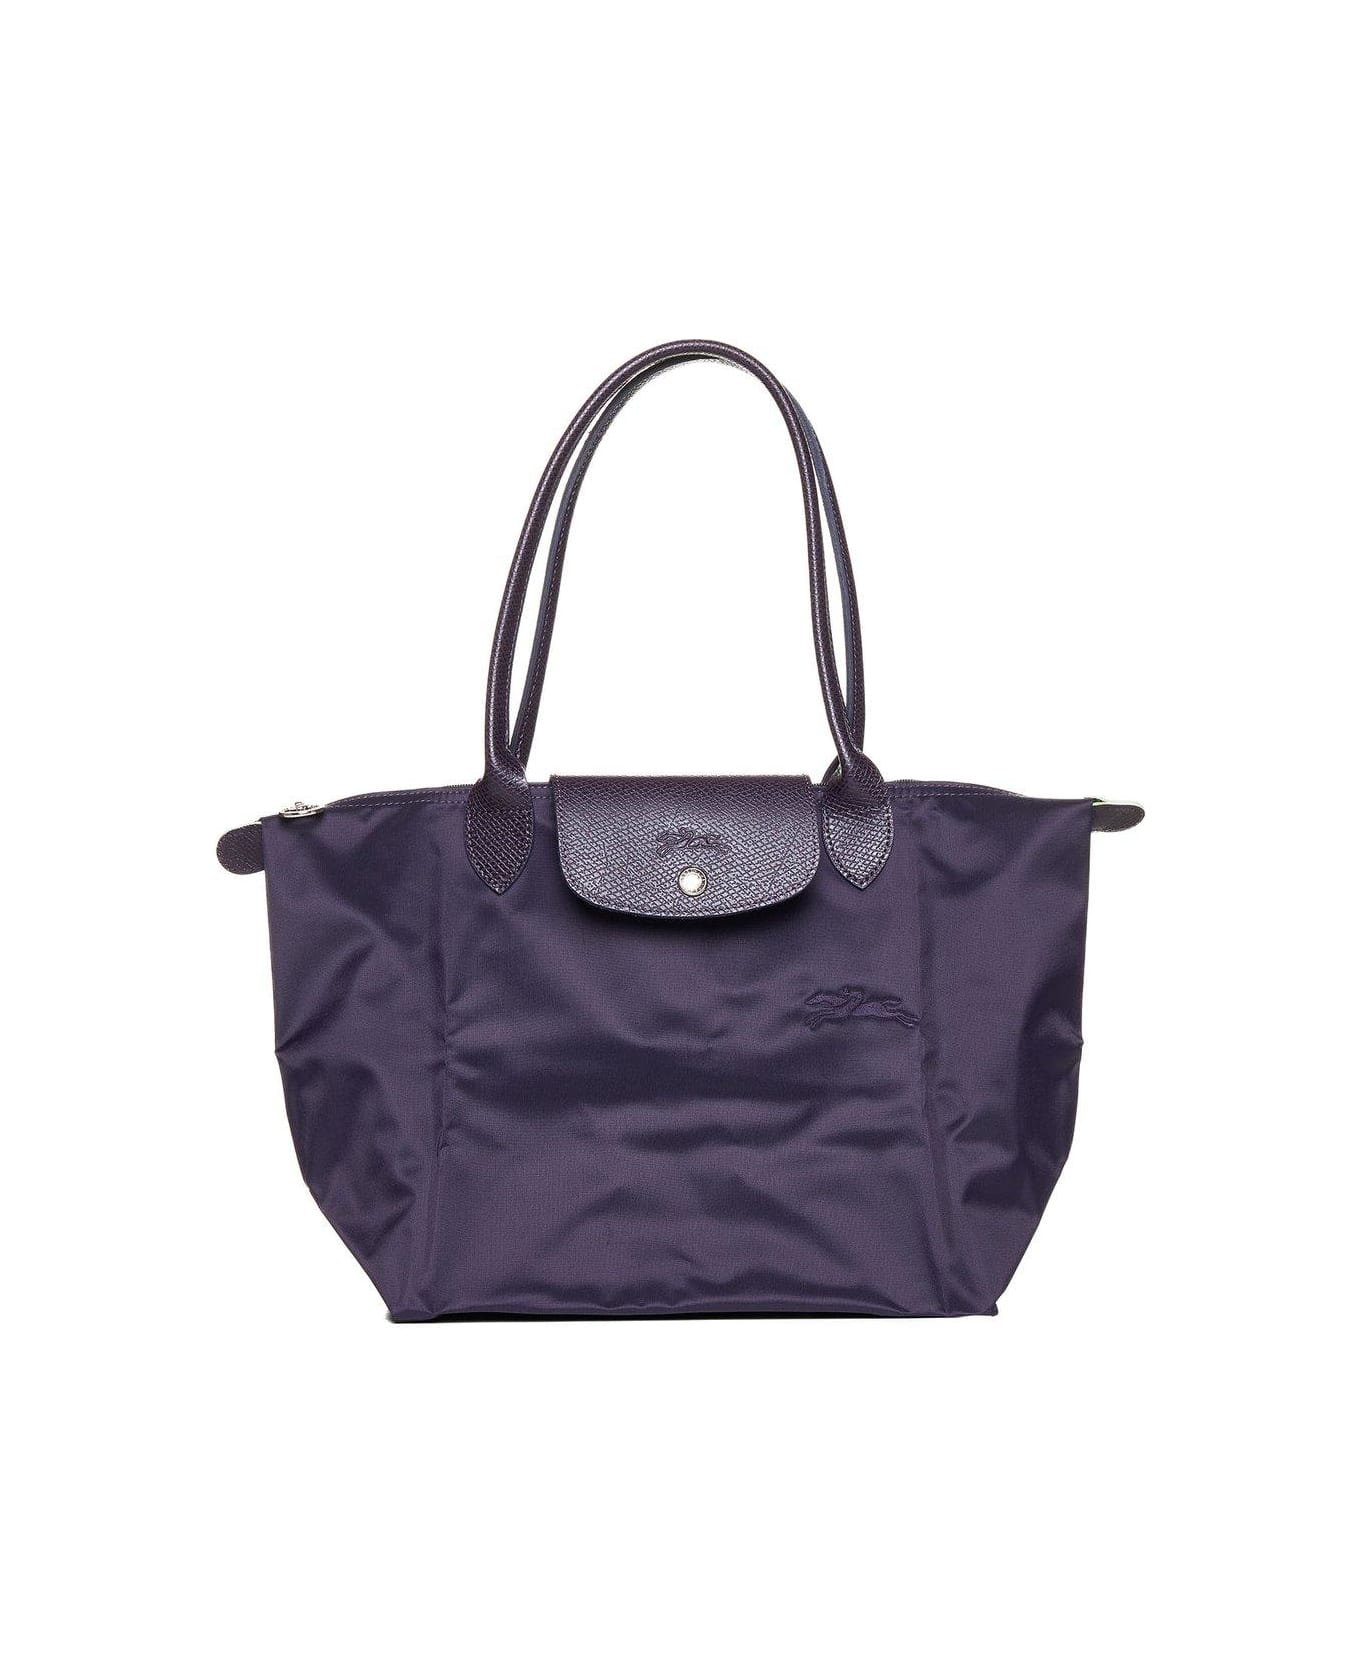 Longchamp Le Pliage Small Tote Bag - Blueberry